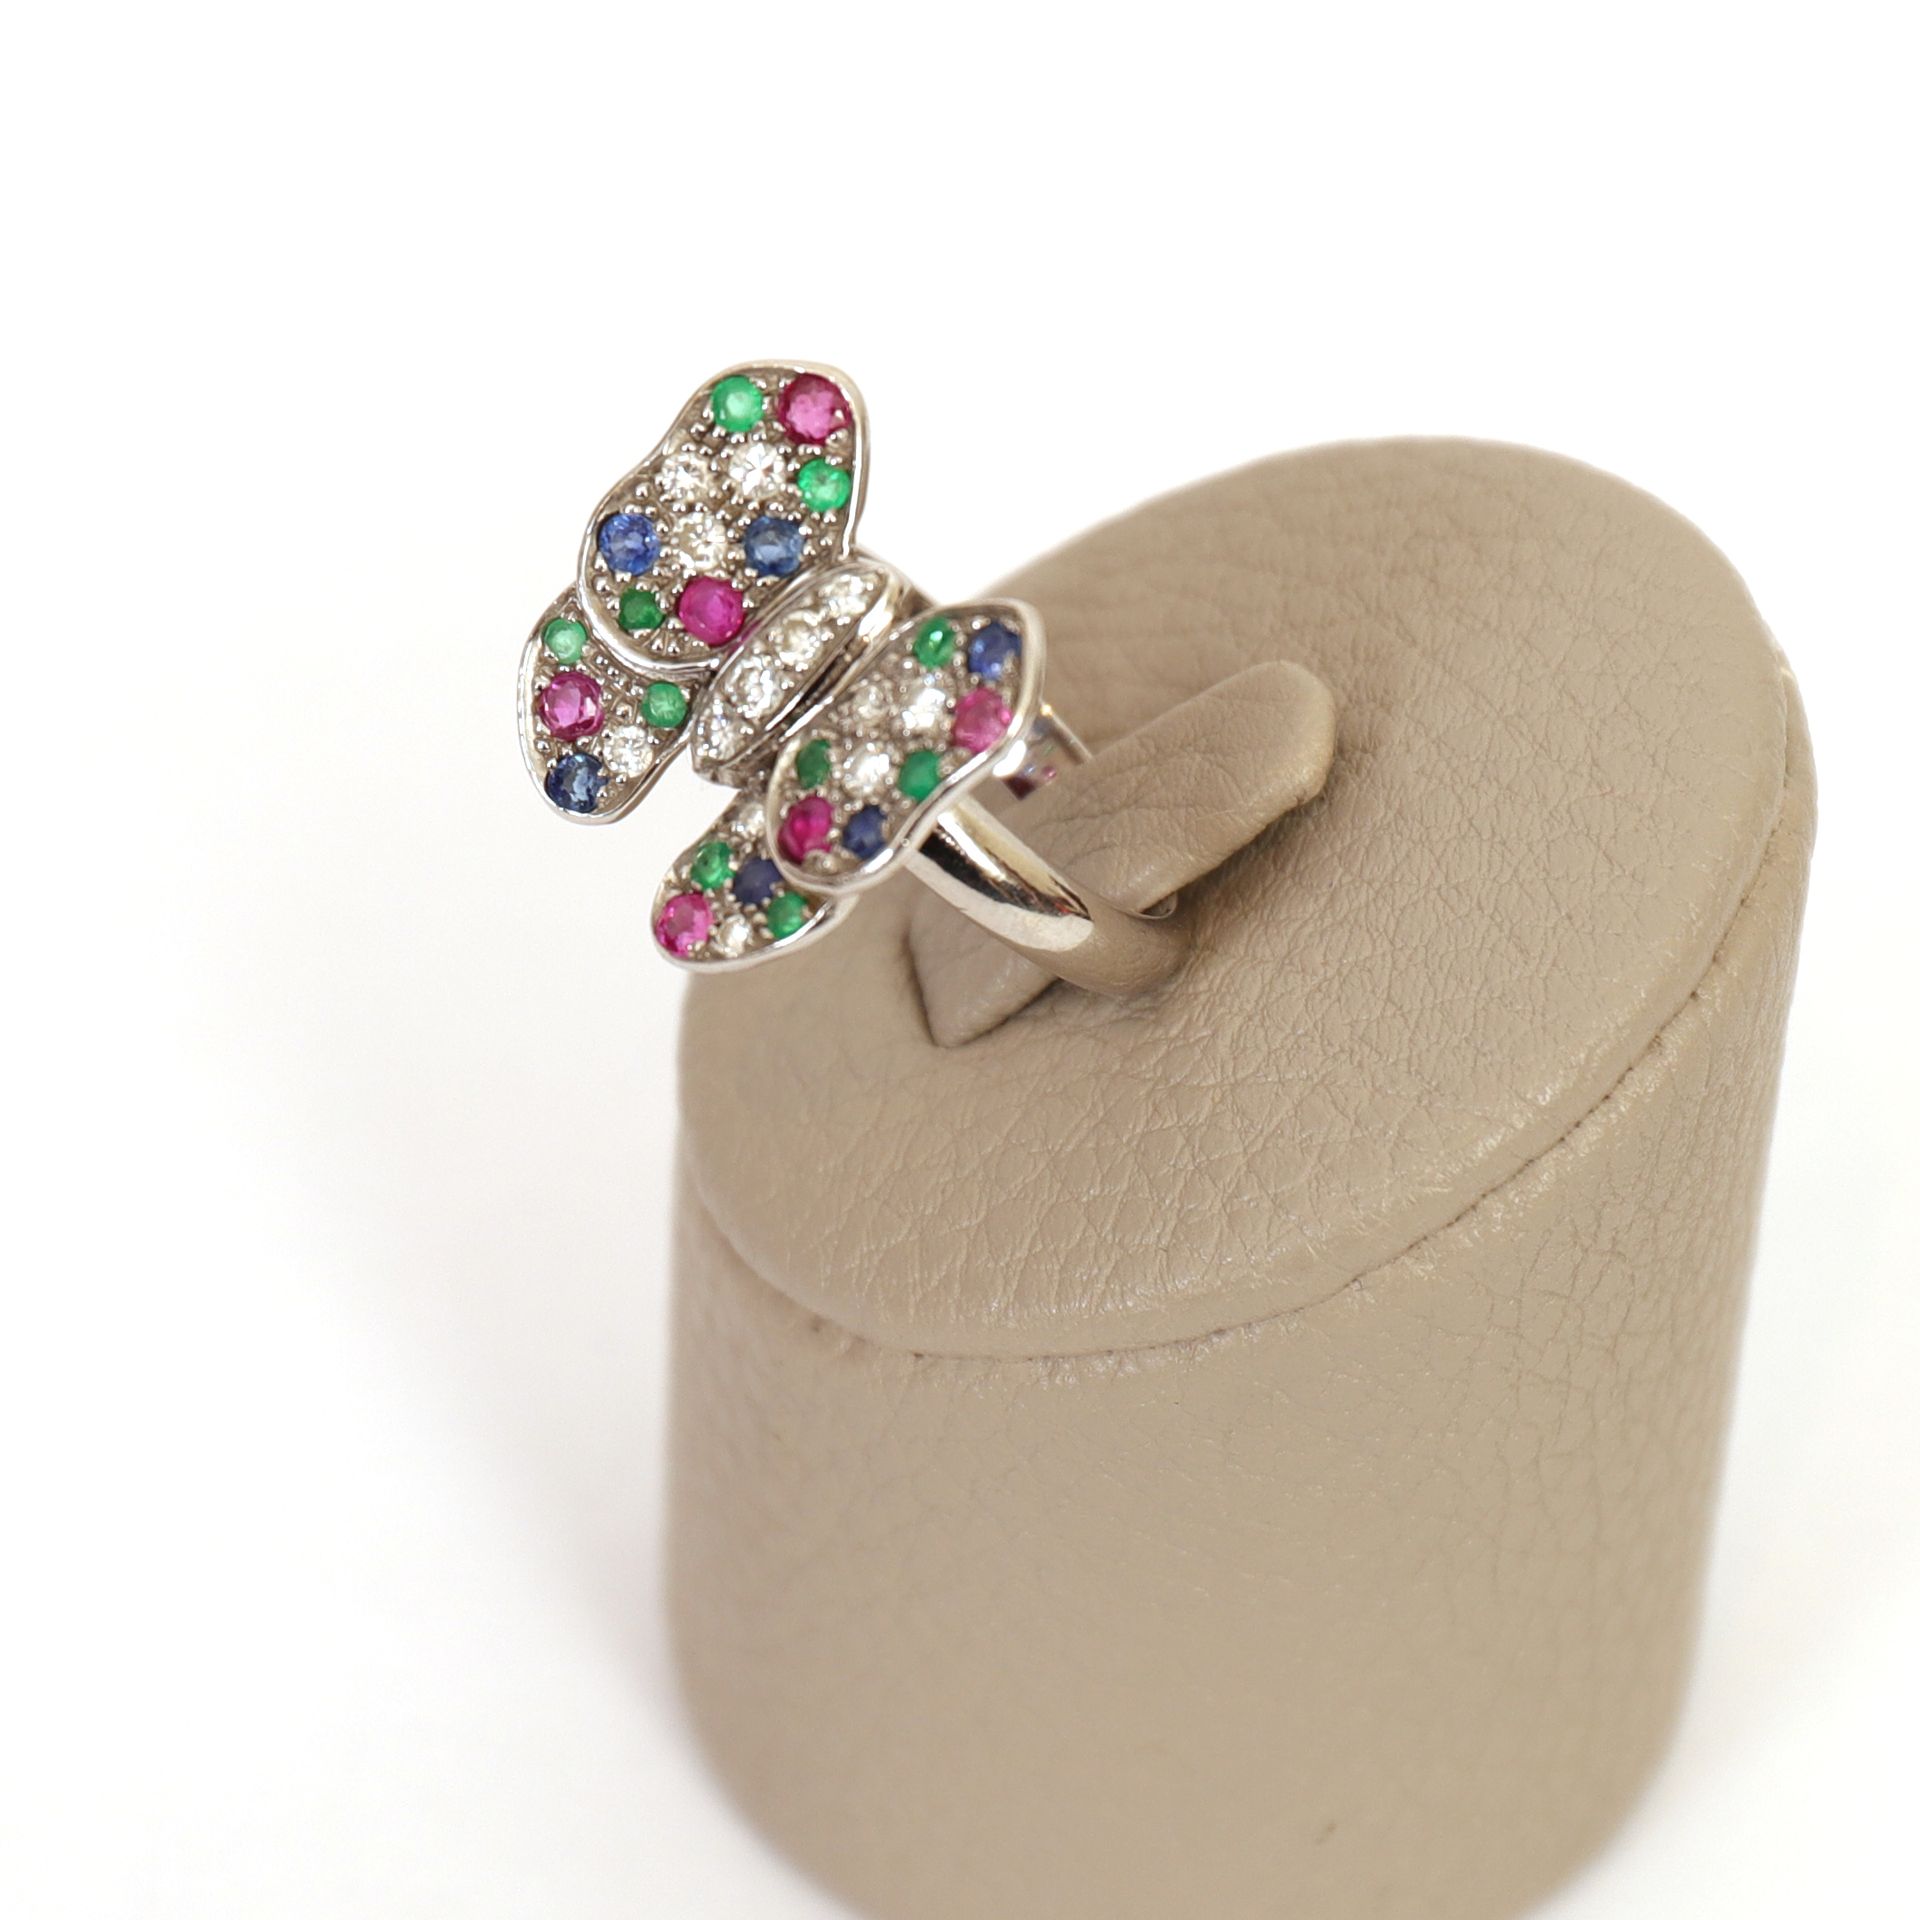 Null 白金蝴蝶戒指

蝴蝶形的表圈上有各种明亮式切割的宝石，包括10颗钻石、10颗绿宝石、6颗蓝宝石和6颗红宝石。

20世纪时期

Pb : 10 grs